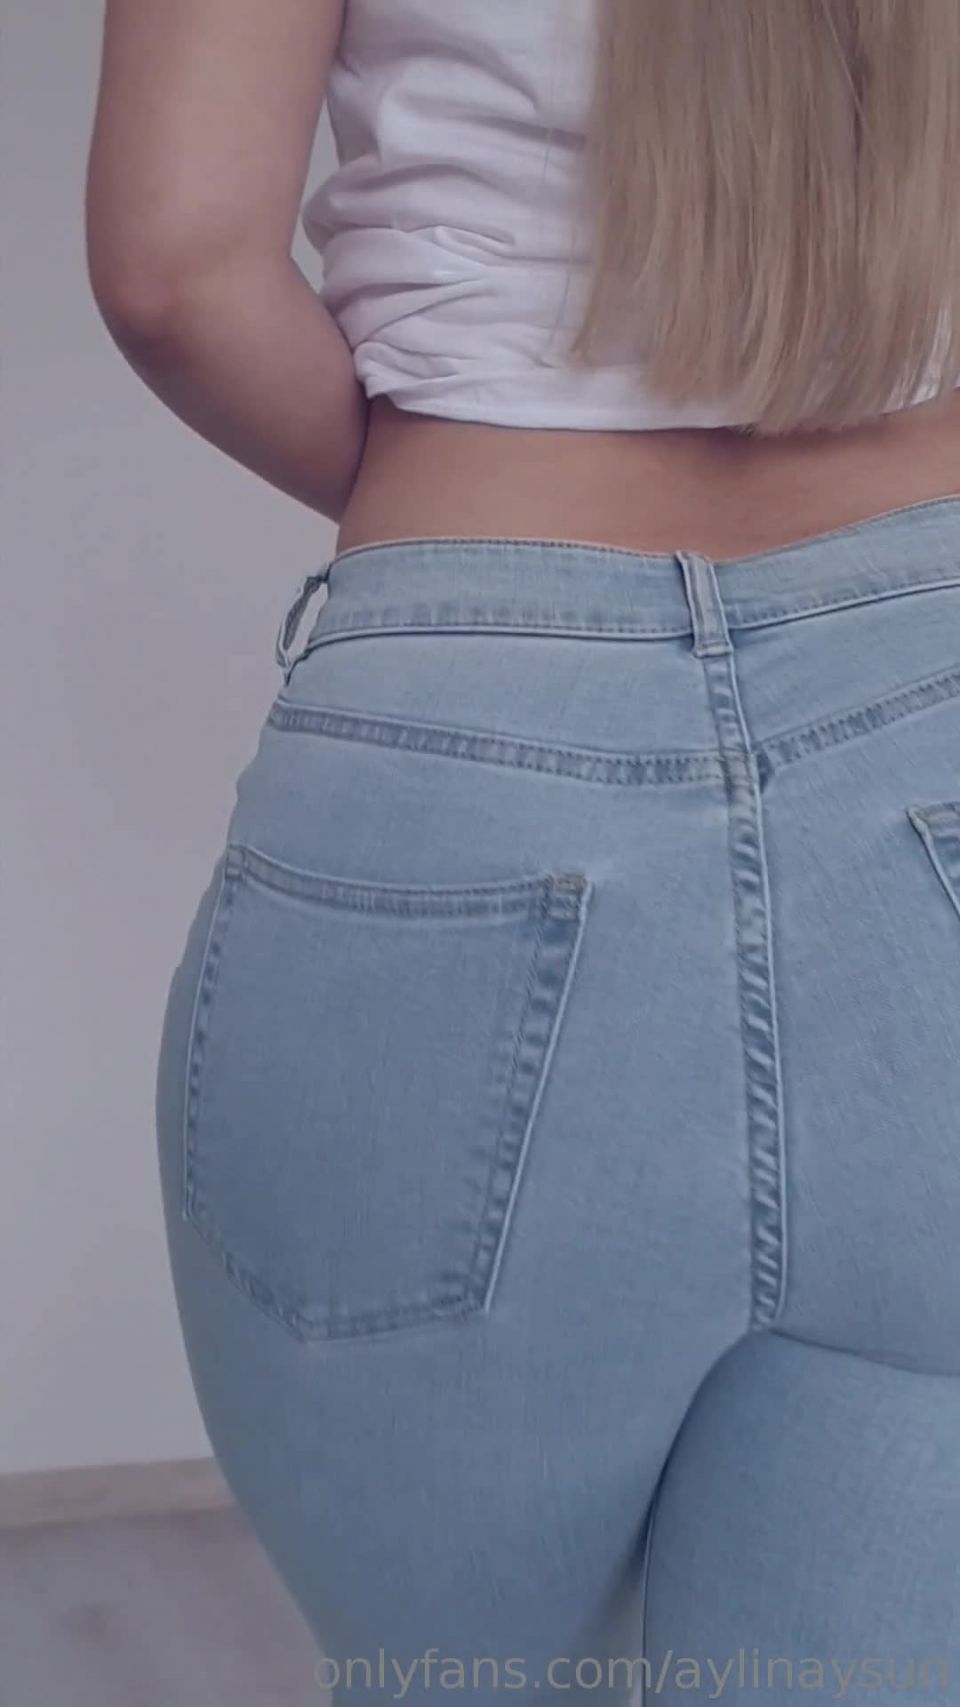 Aylin Aysun () Aylinaysun - jeans fetish some of my favorite things 09-04-2019